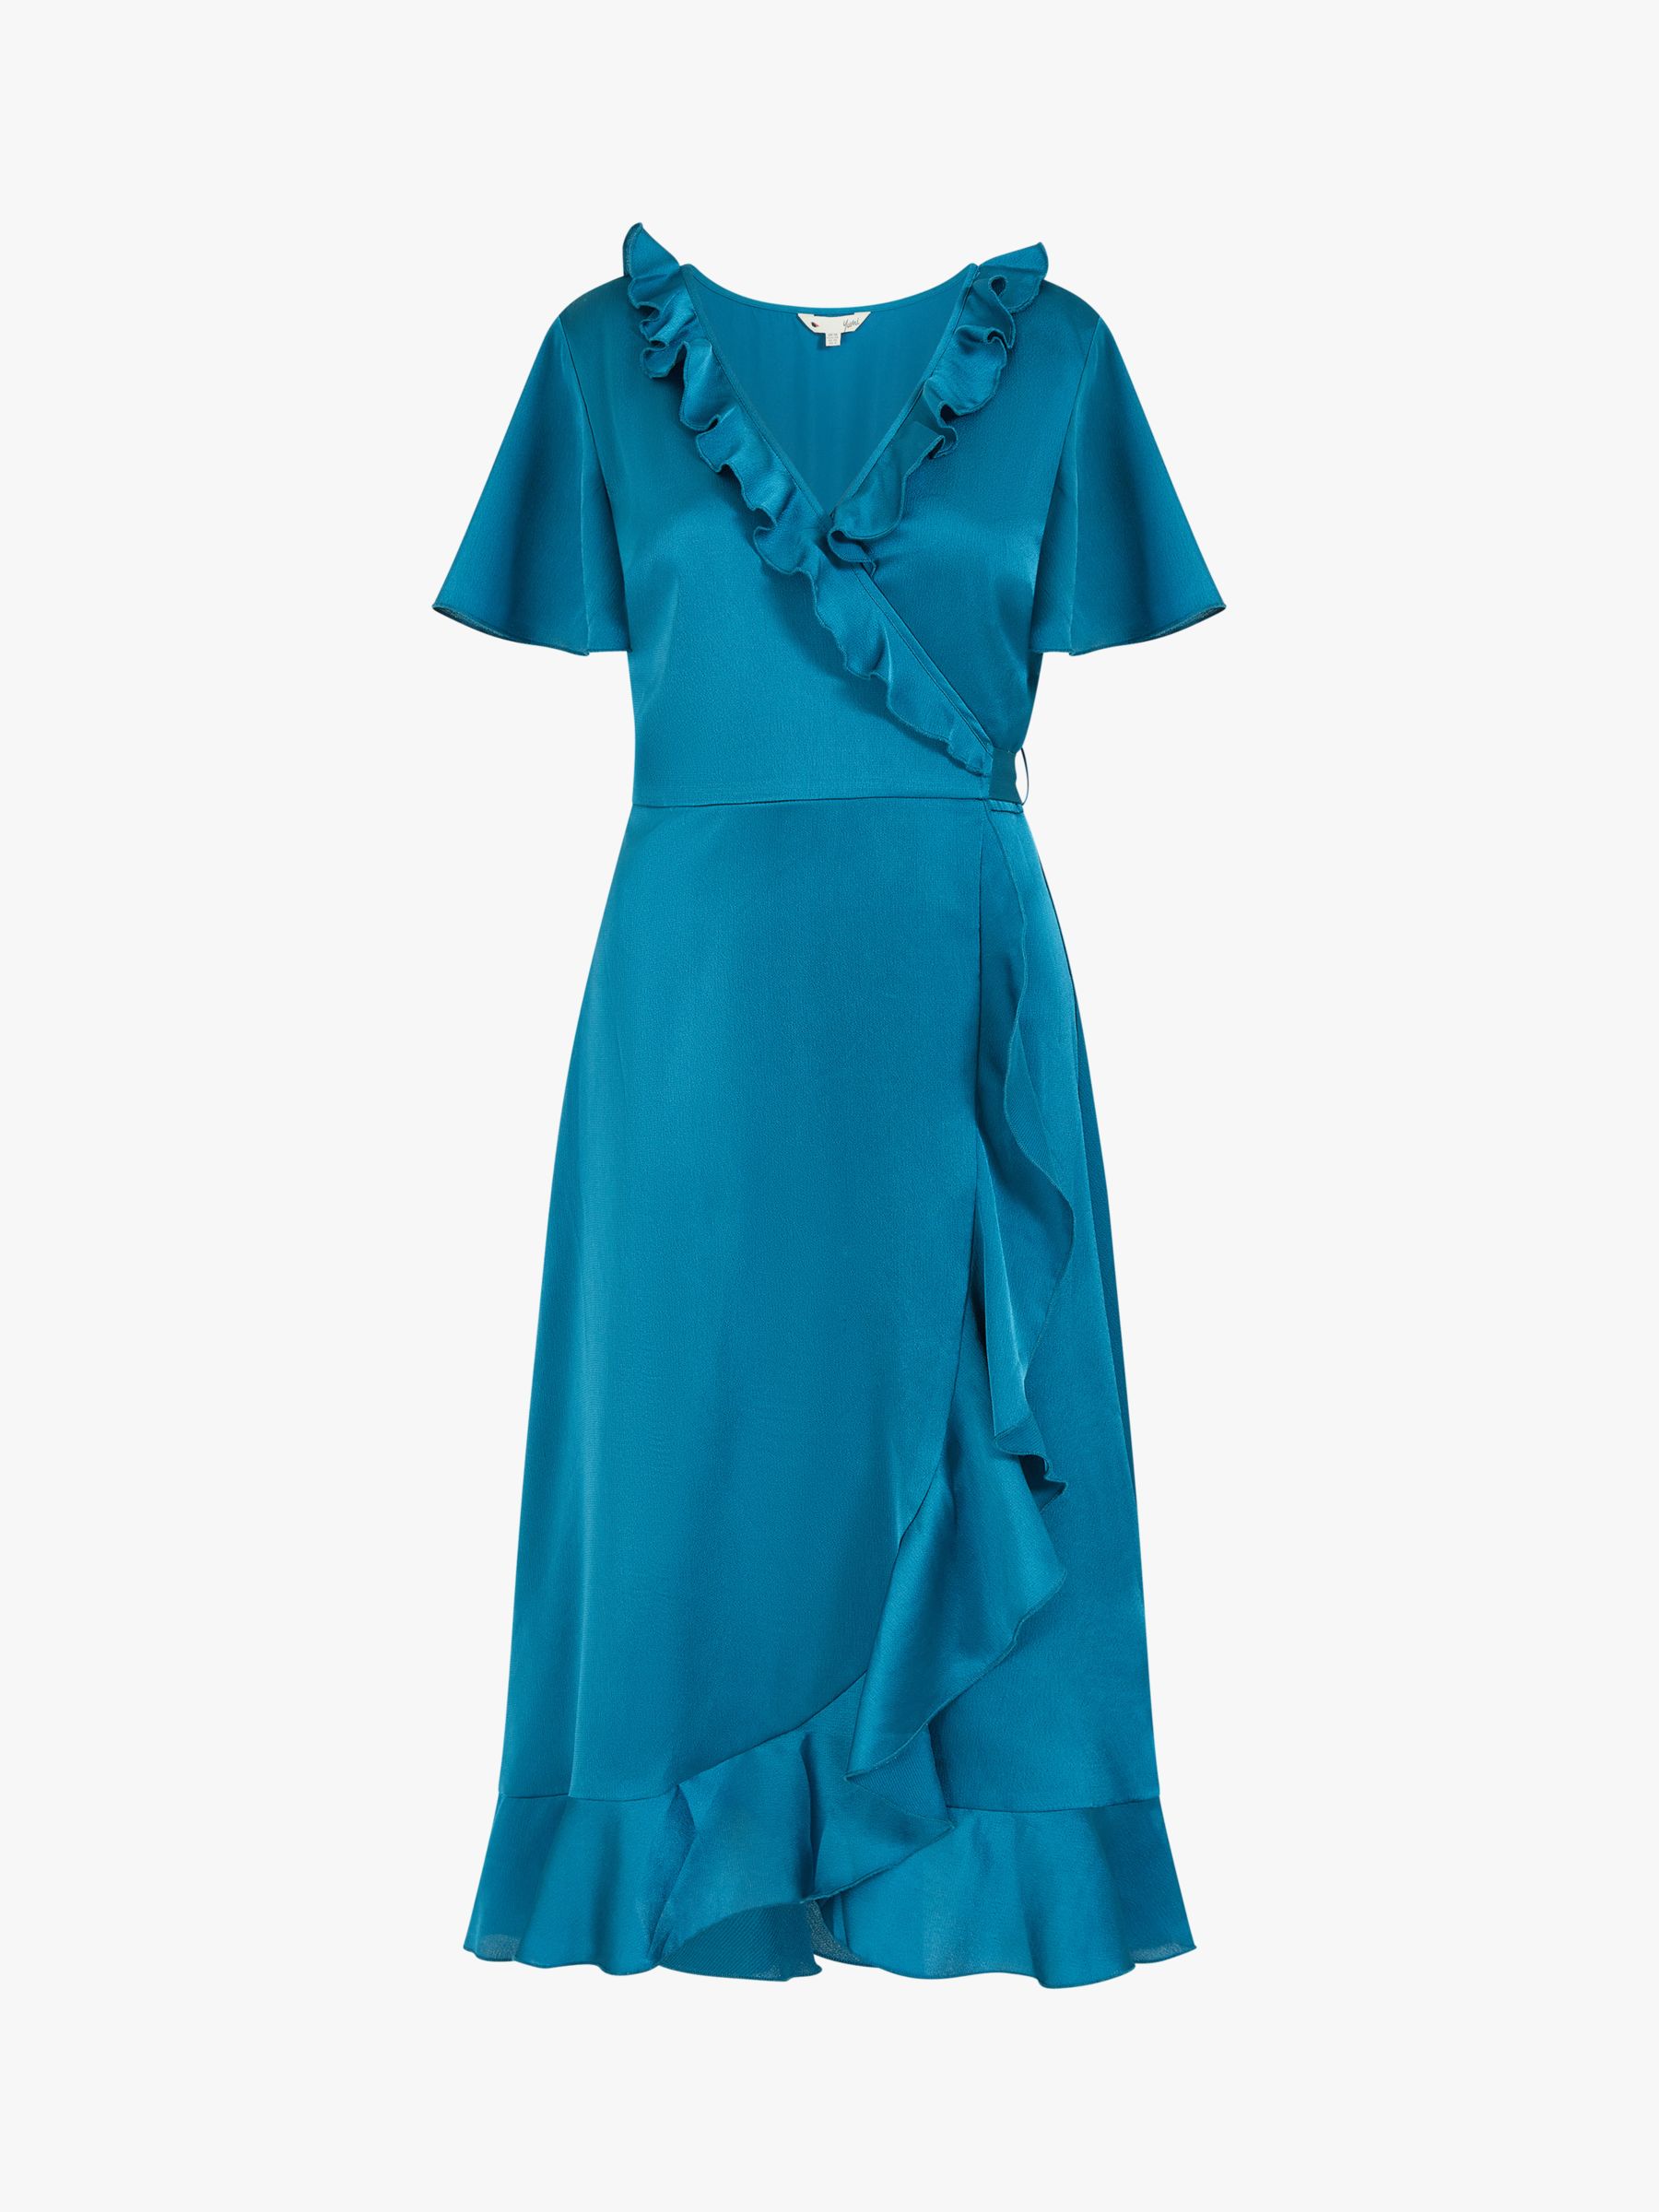 Mela London Frill Detail Midi Wrap Dress, Teal at John Lewis & Partners